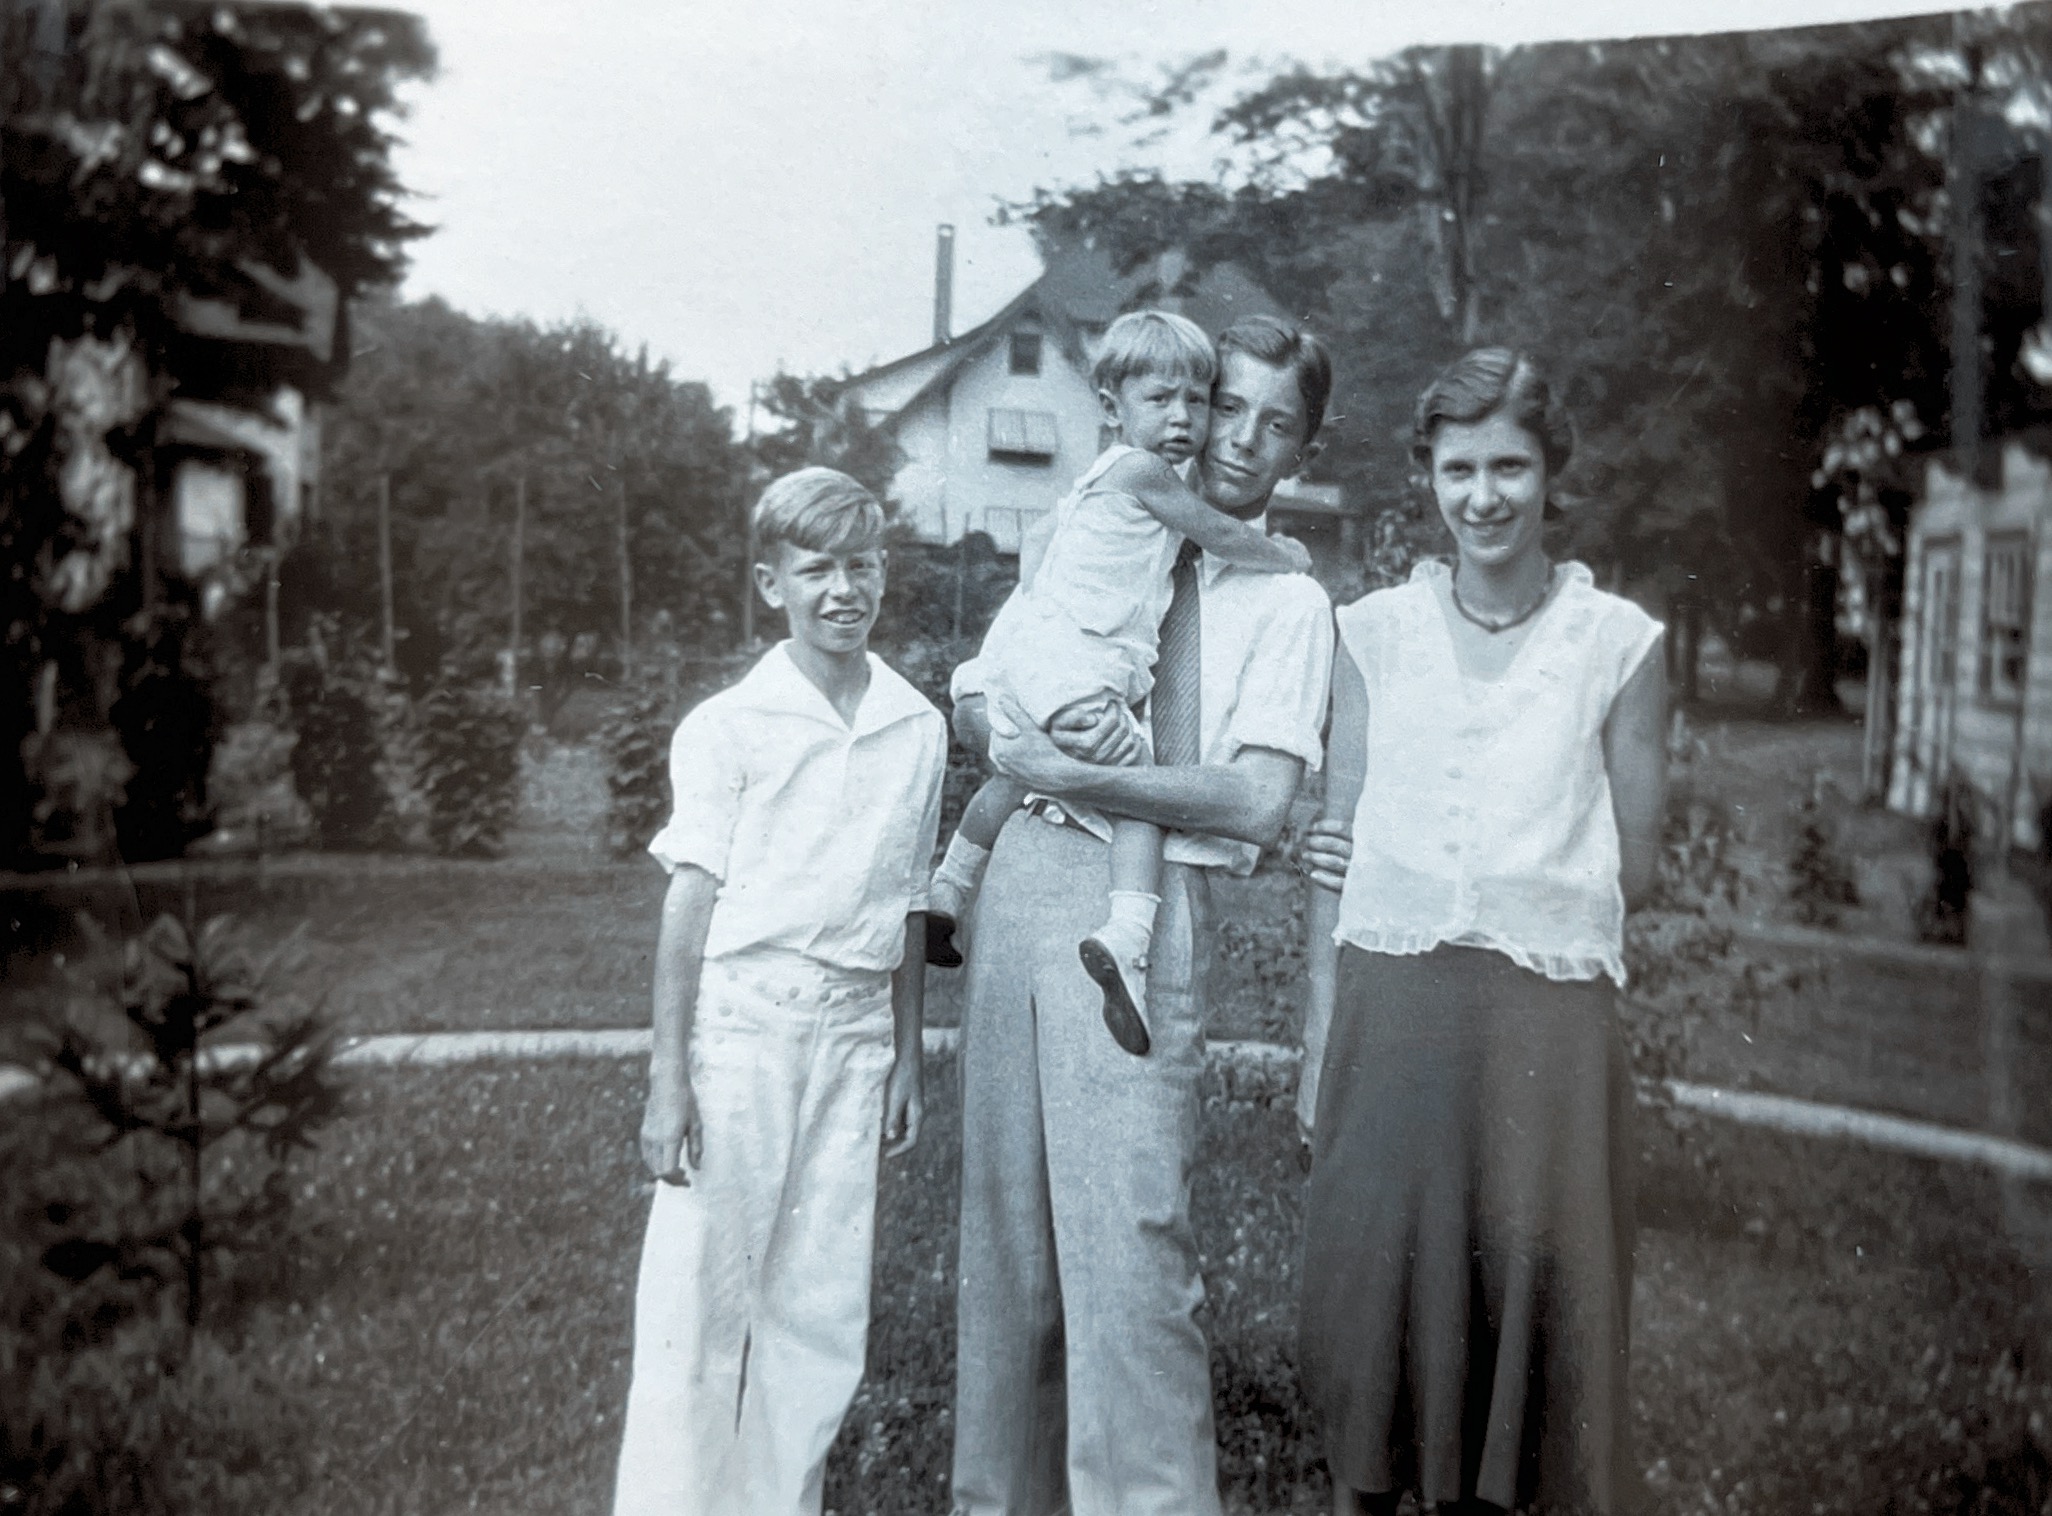 July 4, 1931 
Robert F Neuburger (12), William E Neuburger (2), Charles R Neuburger (18) unknown female (possibly their cousin Helen Calder (age 16)
The Neuburger boys are the sons of Vilma Refalvy